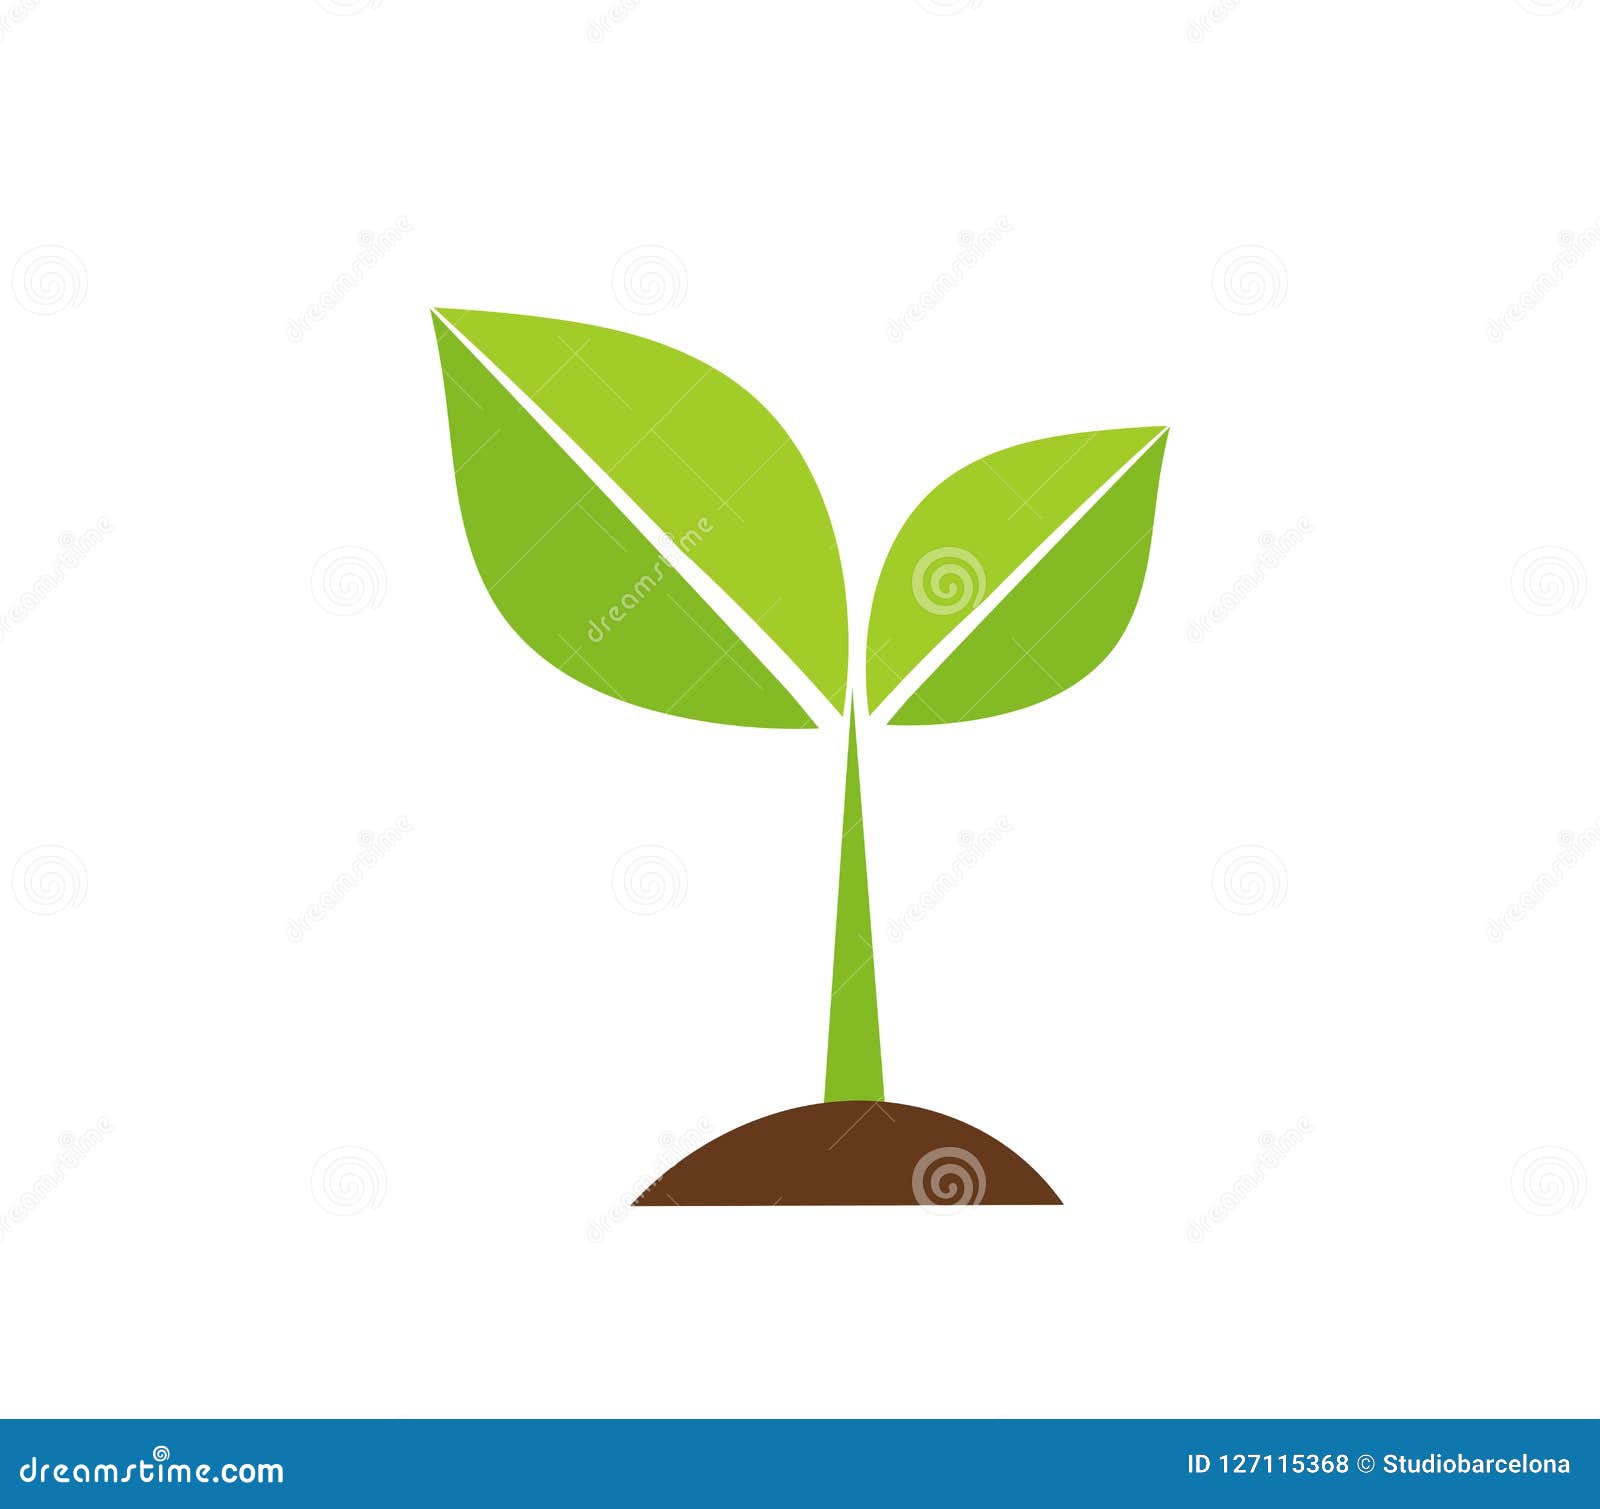 plant seedling icon